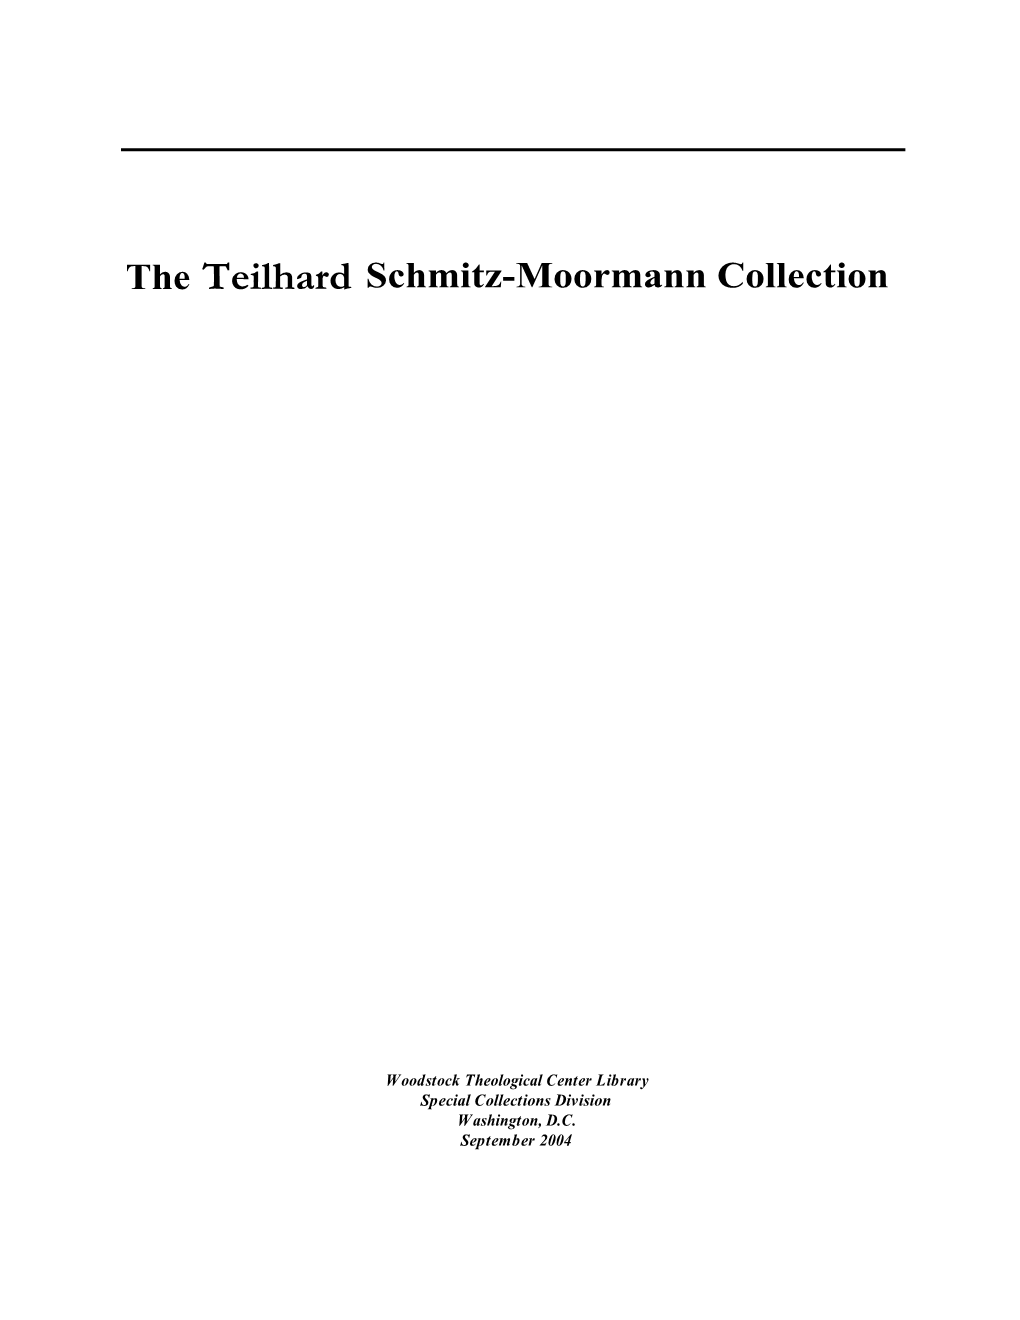 The Teilhard Schmitz-Moormann Collection